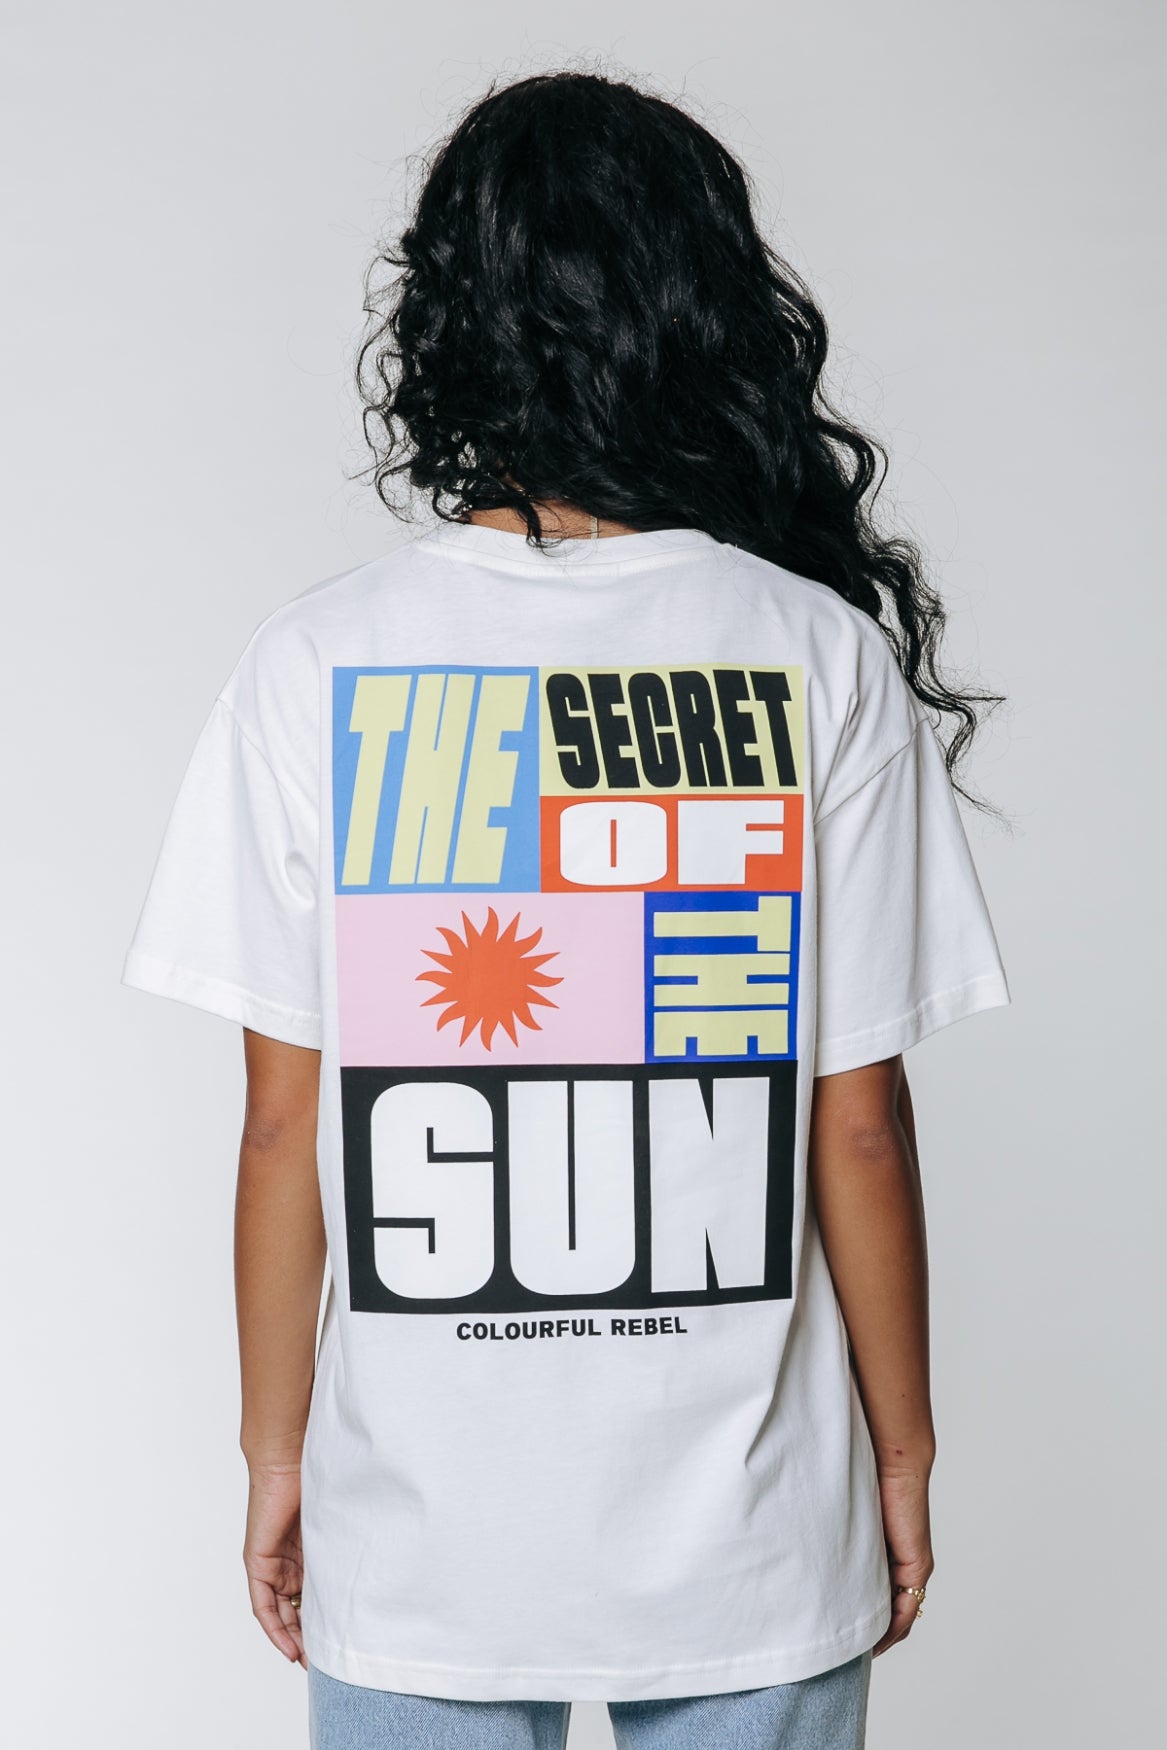 Secret Sun loose fit tee - off white